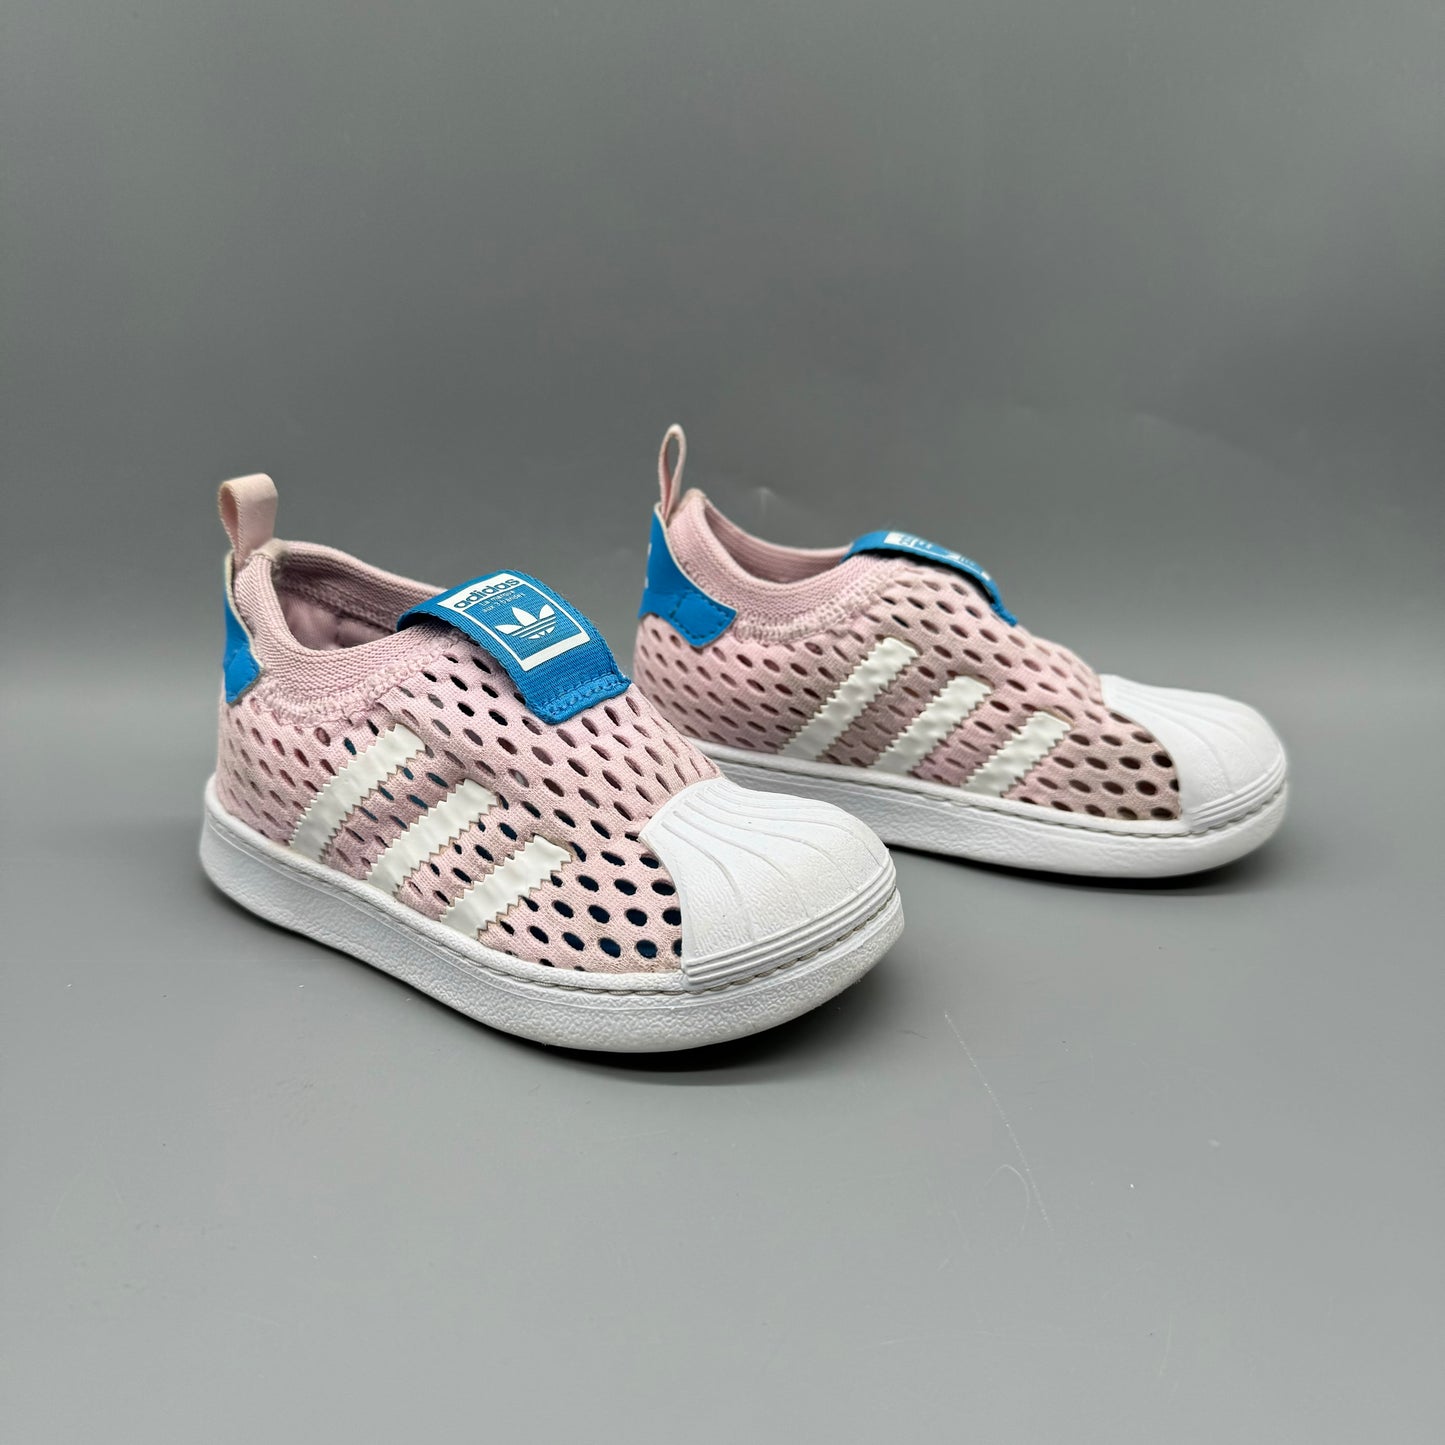 Adidas / Runner / US7